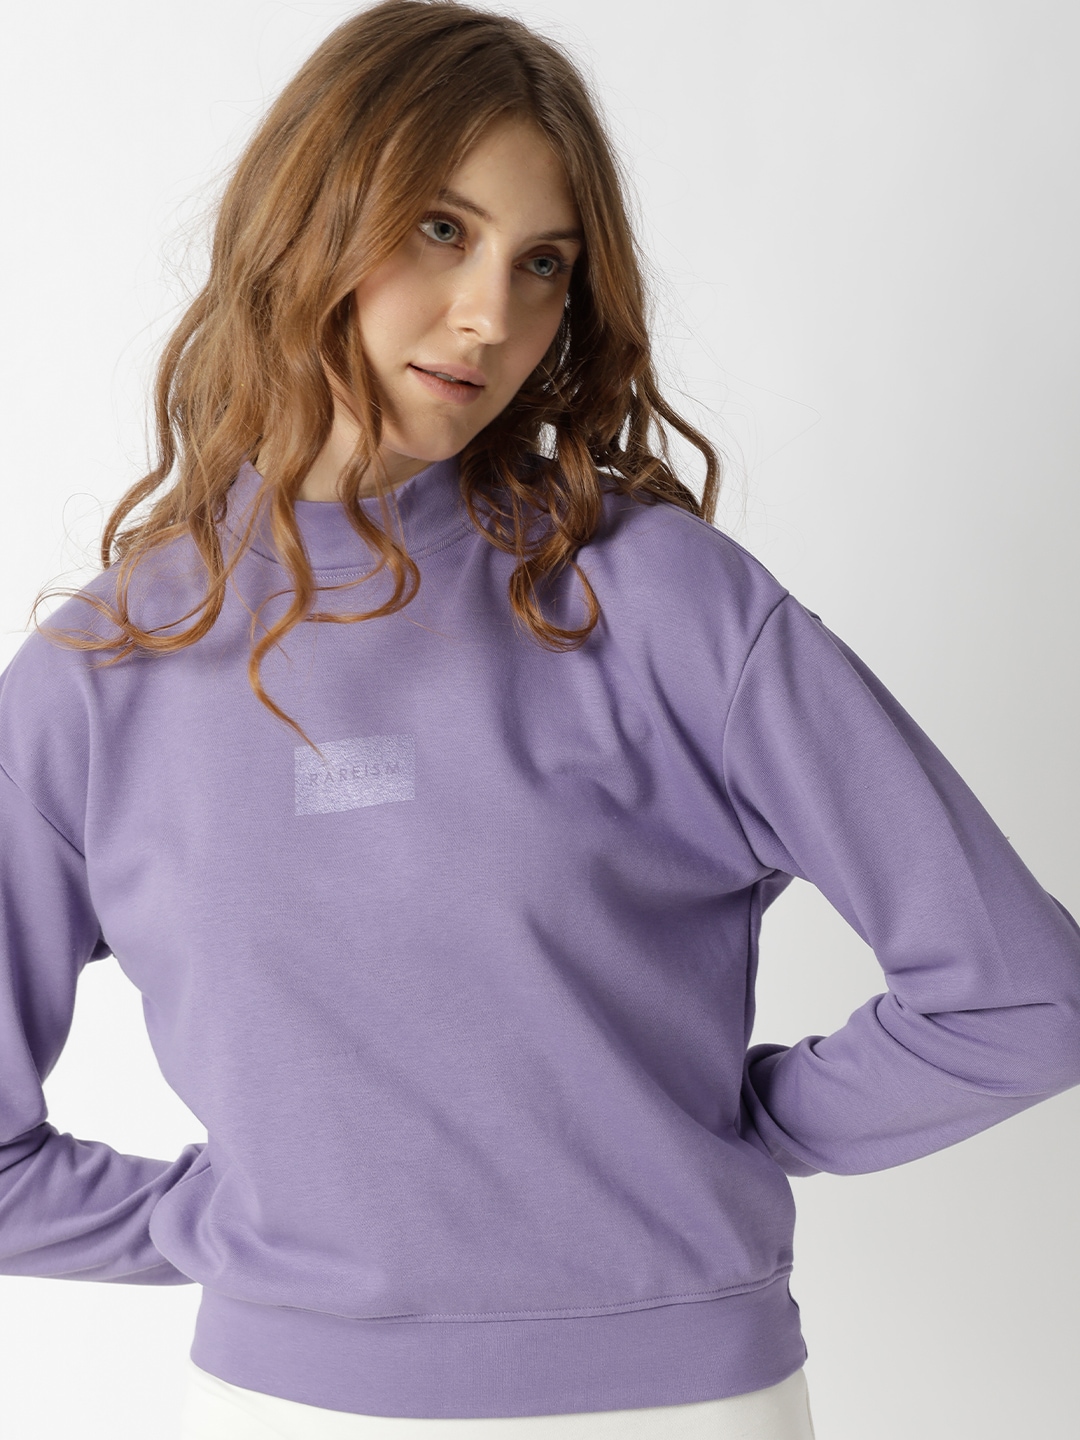 RAREISM Women Purple Solid Sweatshirt Price in India